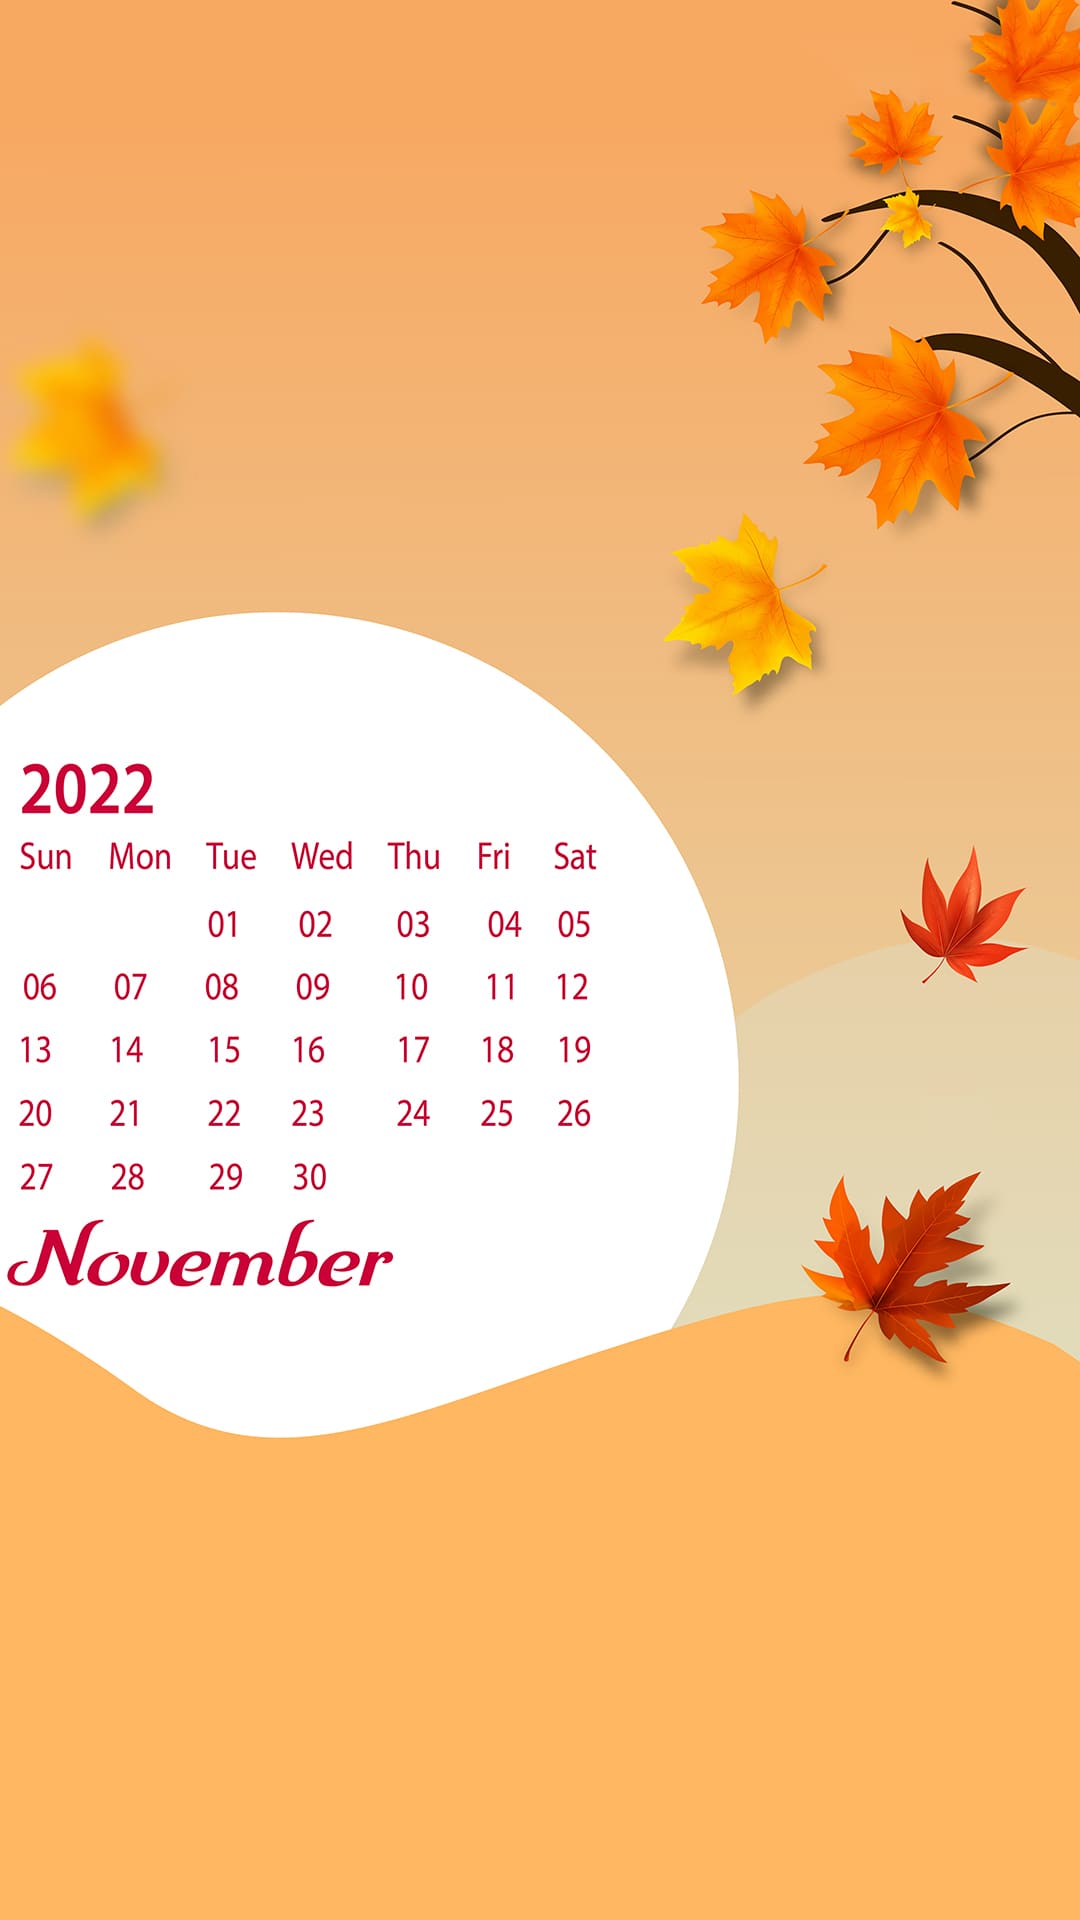 November Calendar 2022 Wallpapers